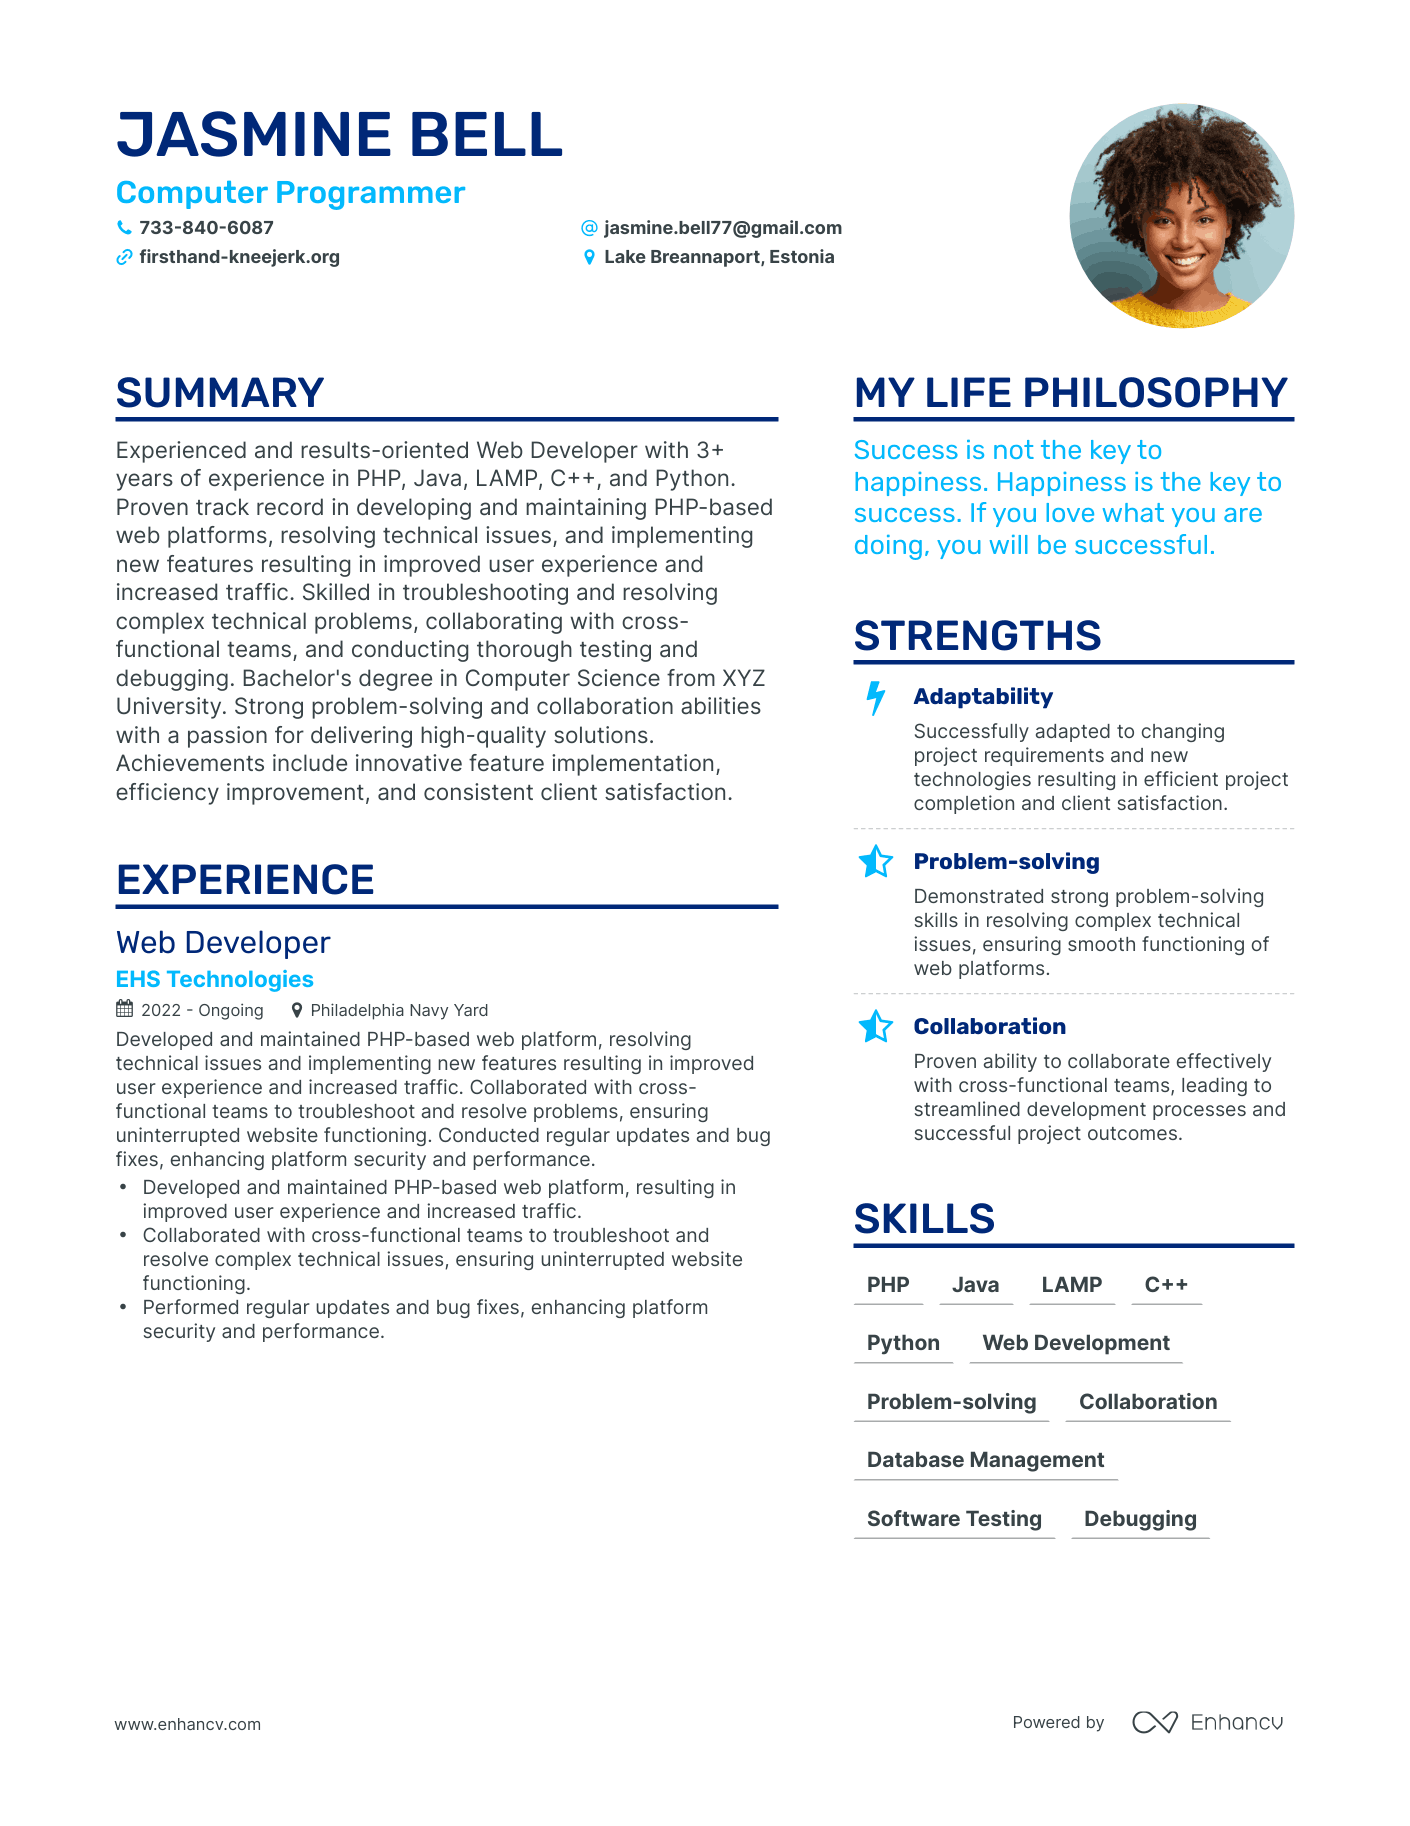 Computer Programmer resume example